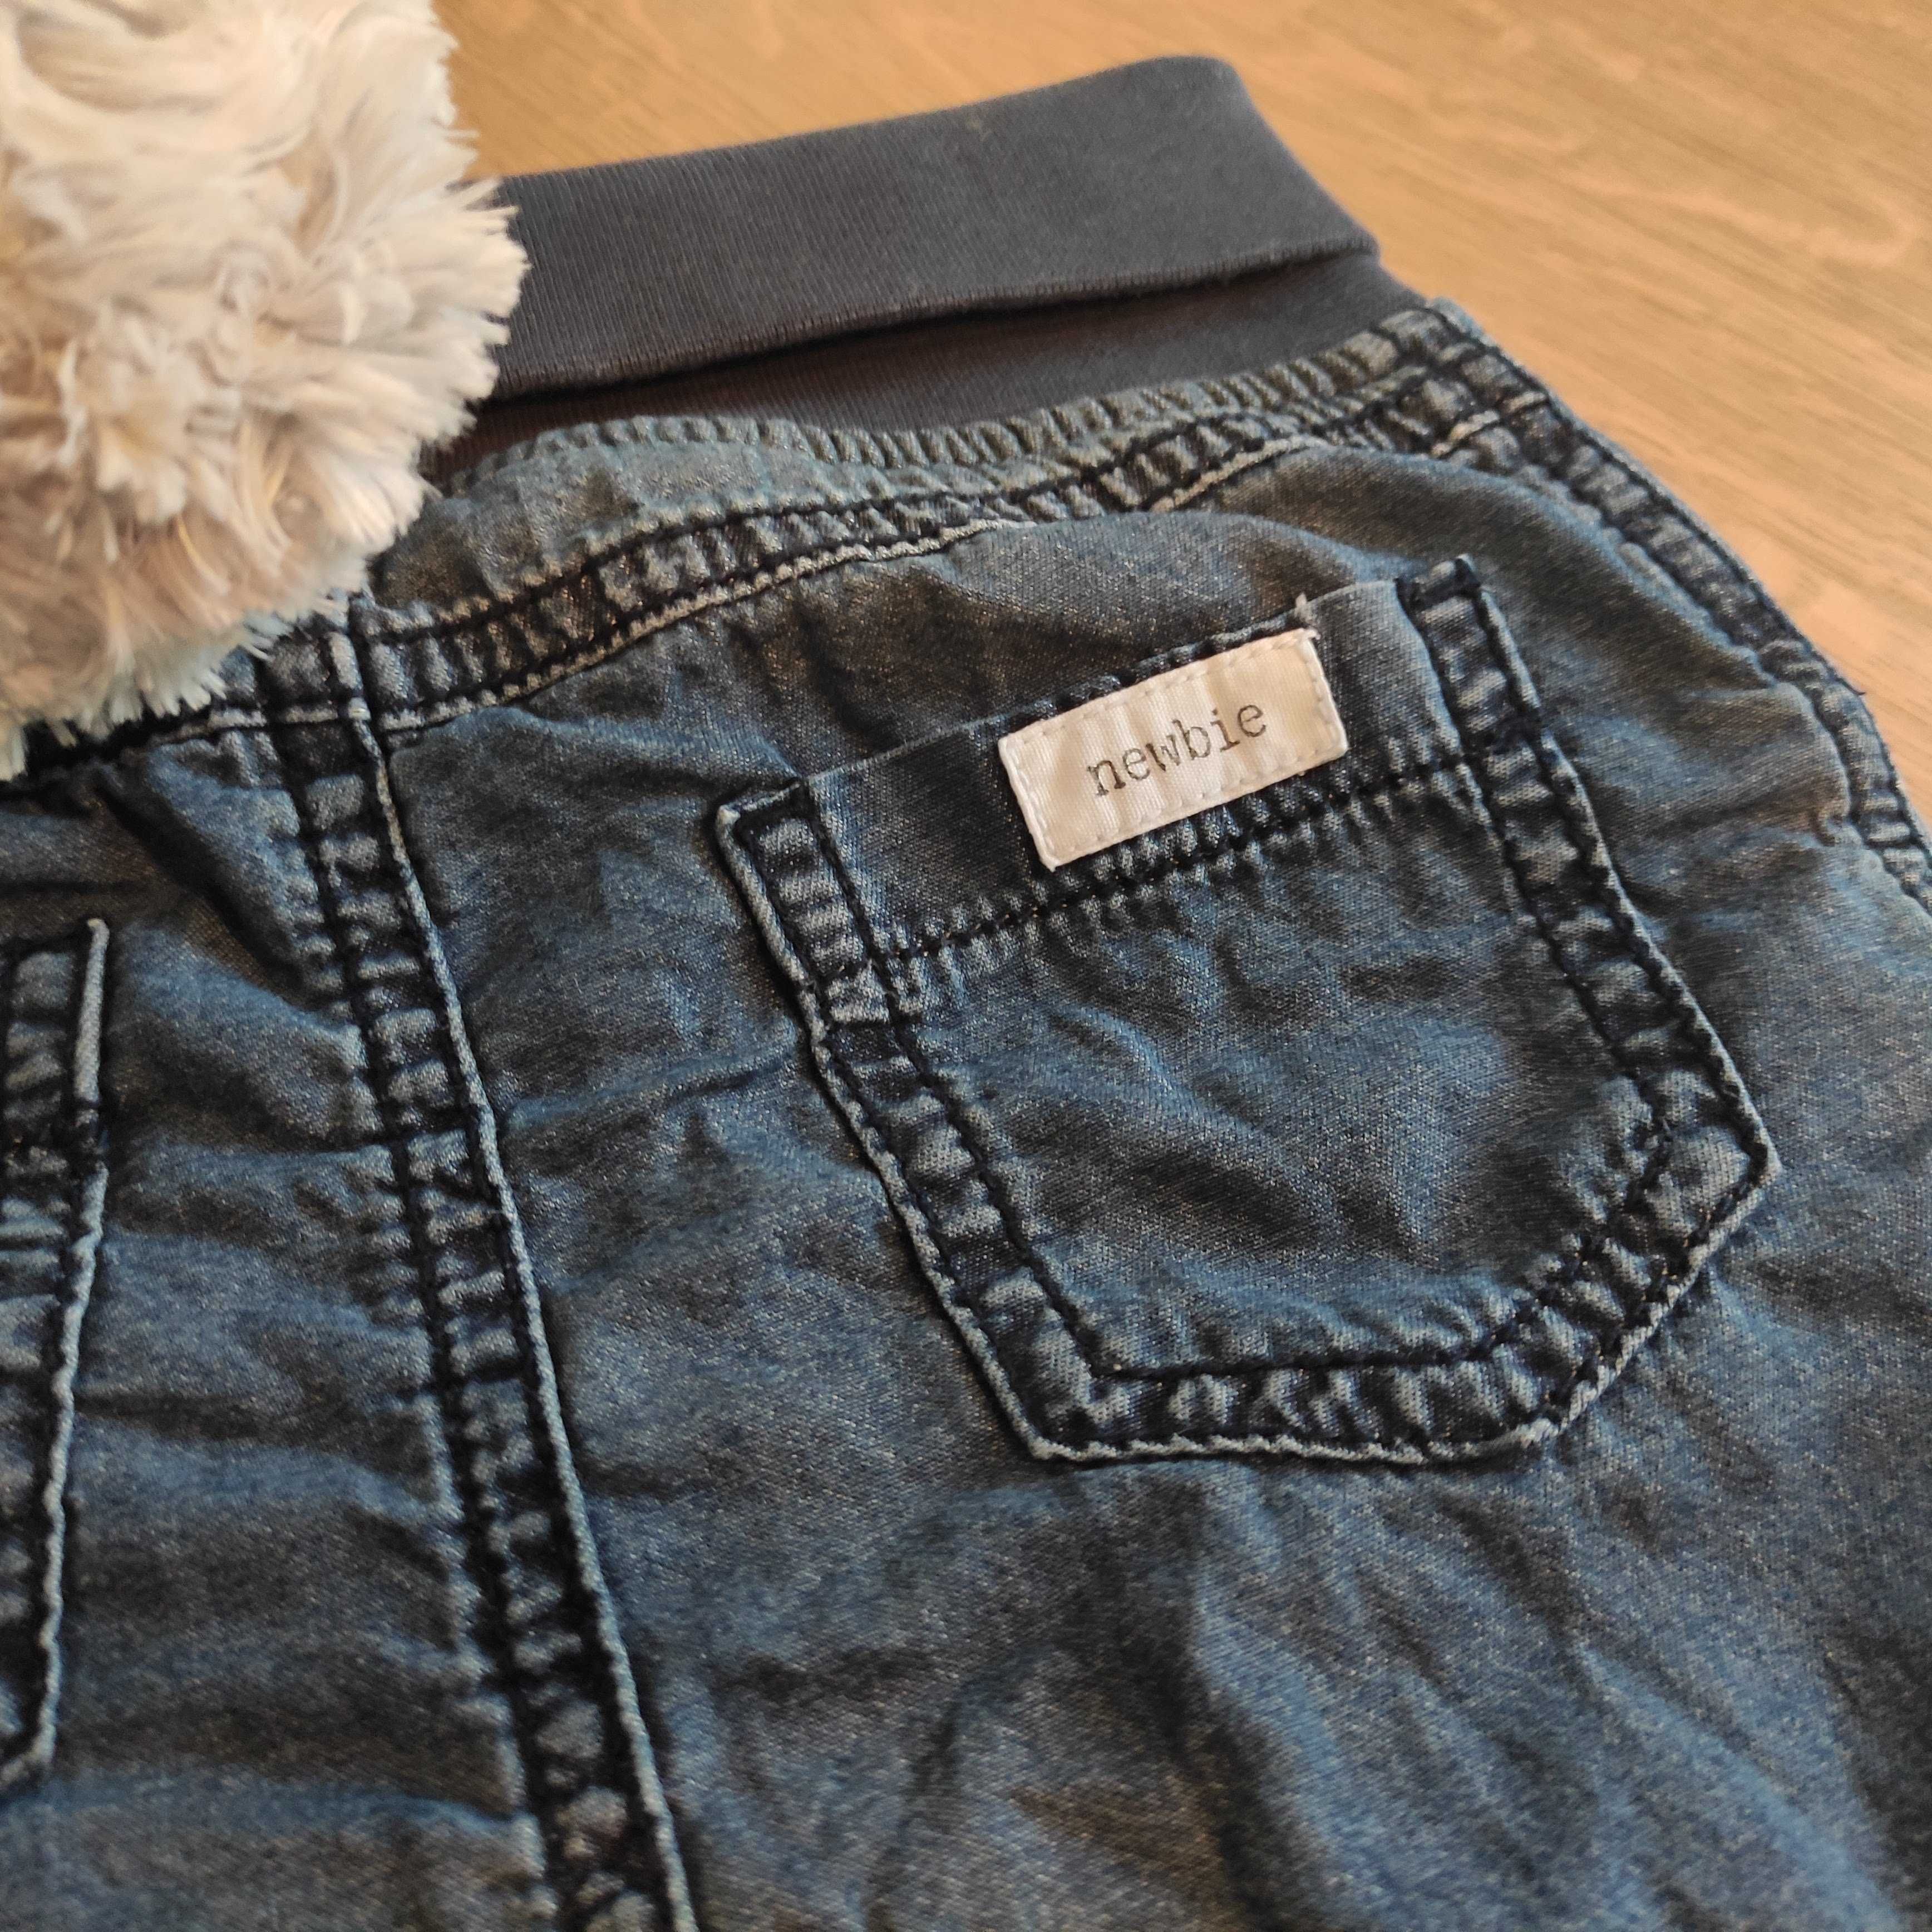 Spodnie niemowlęce jeans KappAhl Newbie, r. 62